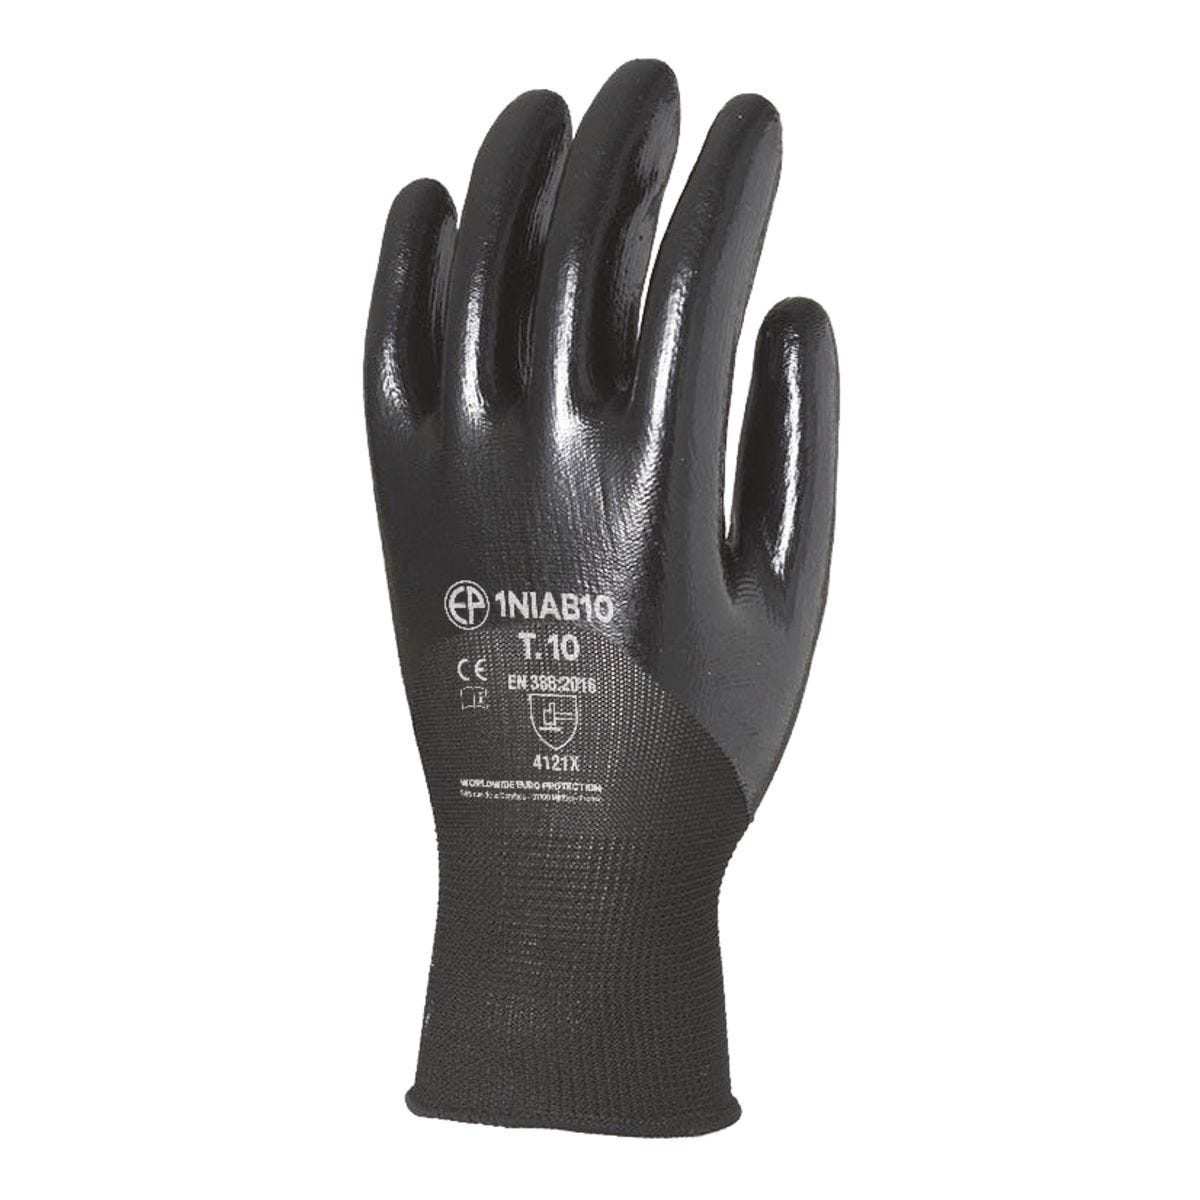 Gants polyester noir jauge 13 enduit 3/4 nitrile noir - Coverguard - Taille S-7 0